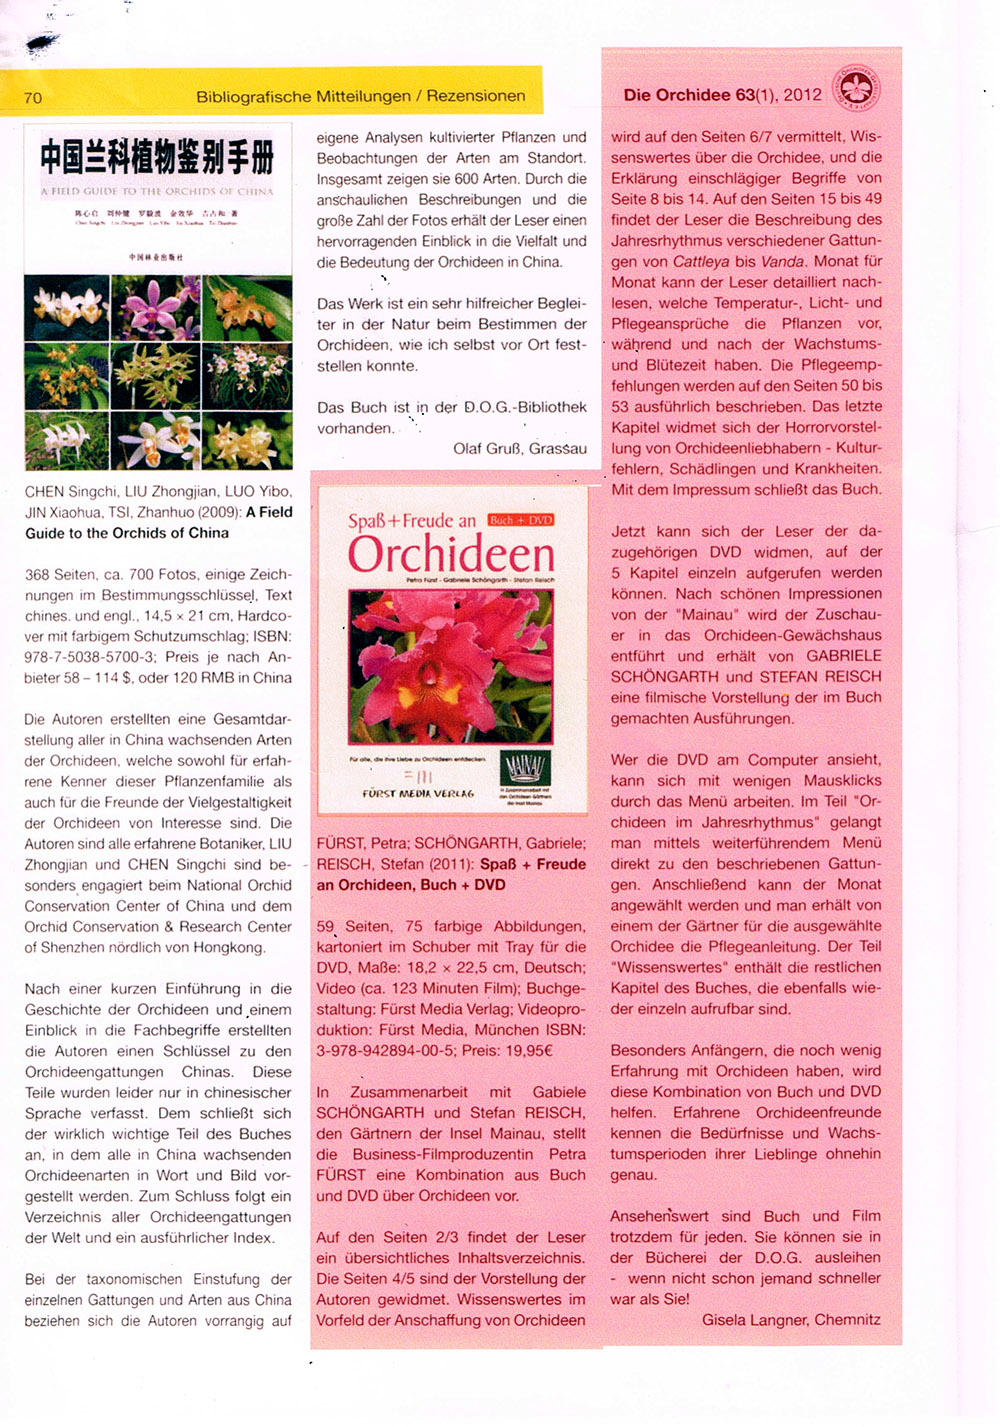 Presse-Rezension-Gisela-Langner-Dt-Orchideen-gesellschaft